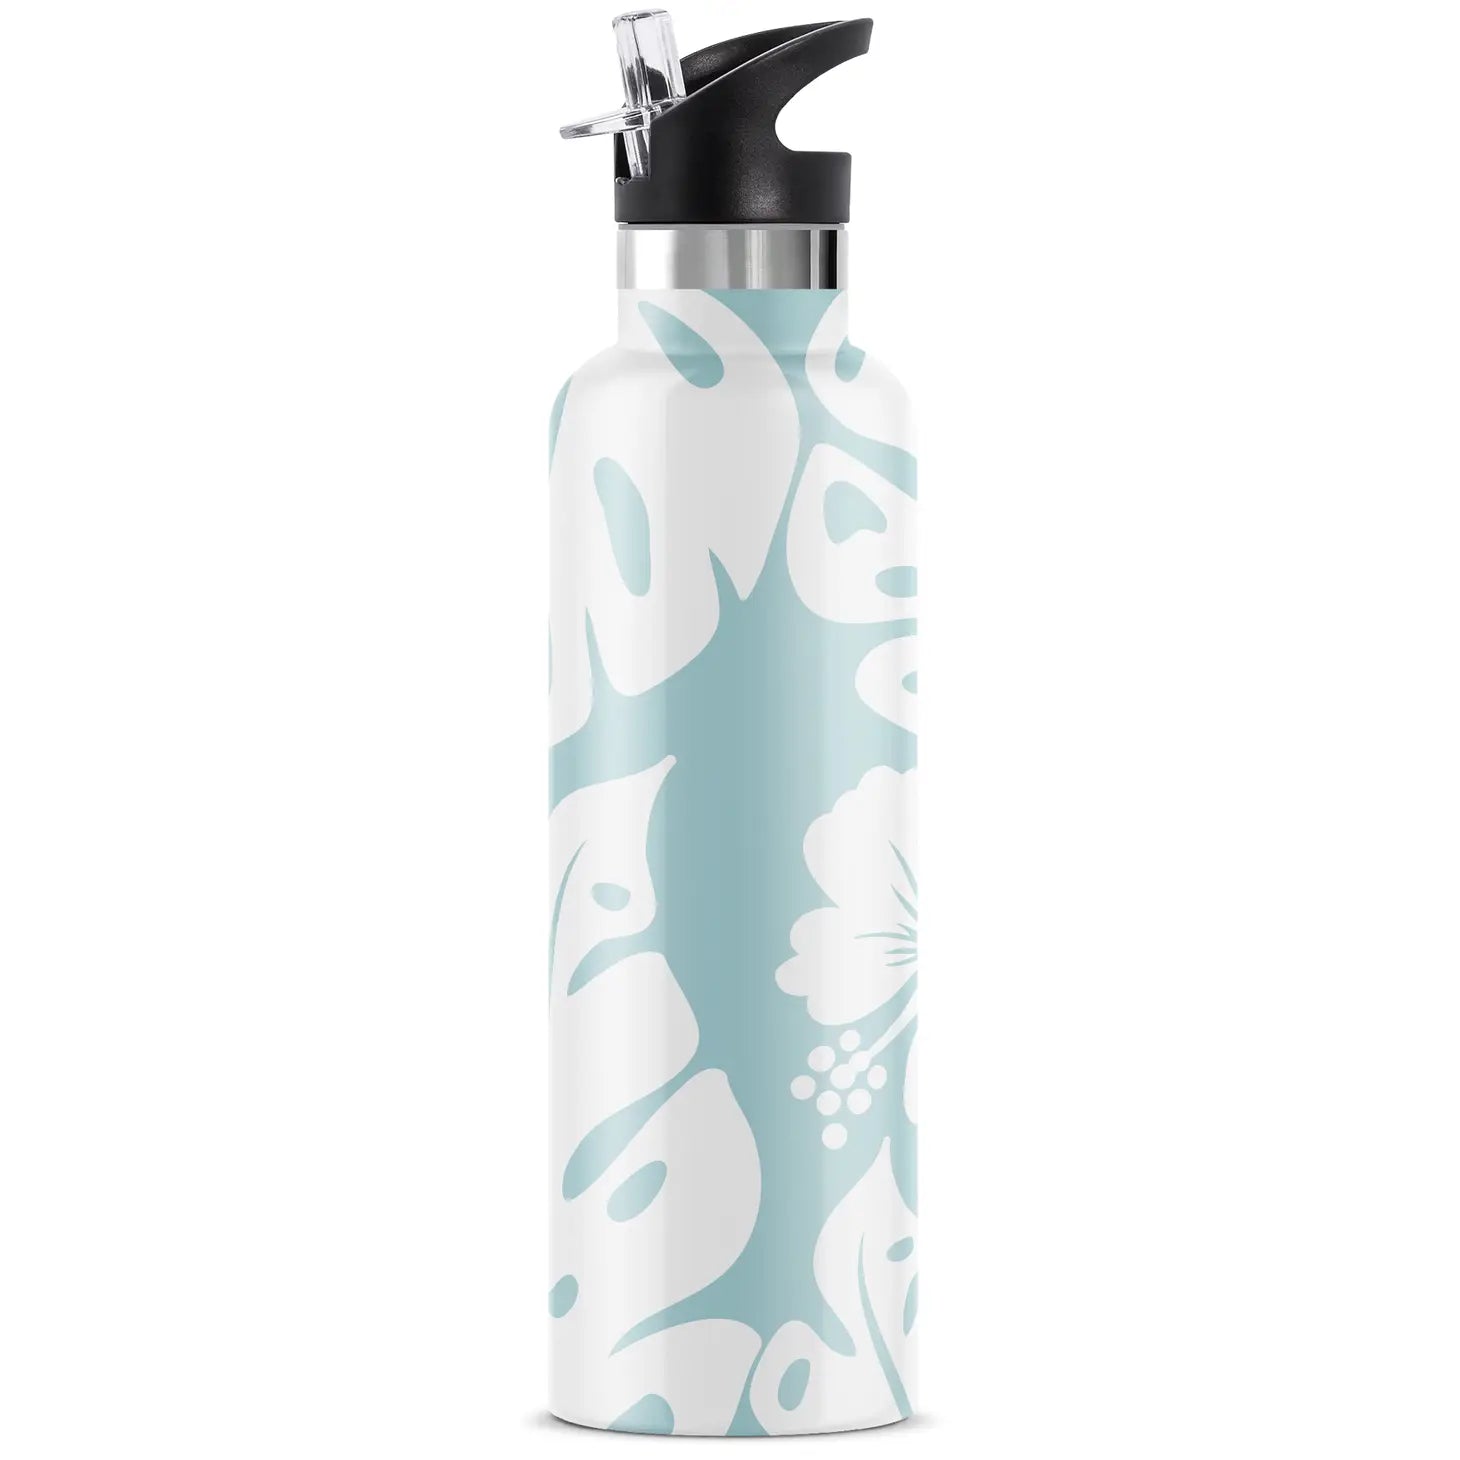 Haiku Insulated Water Bottle Flip-Sip Lid Gift Tube